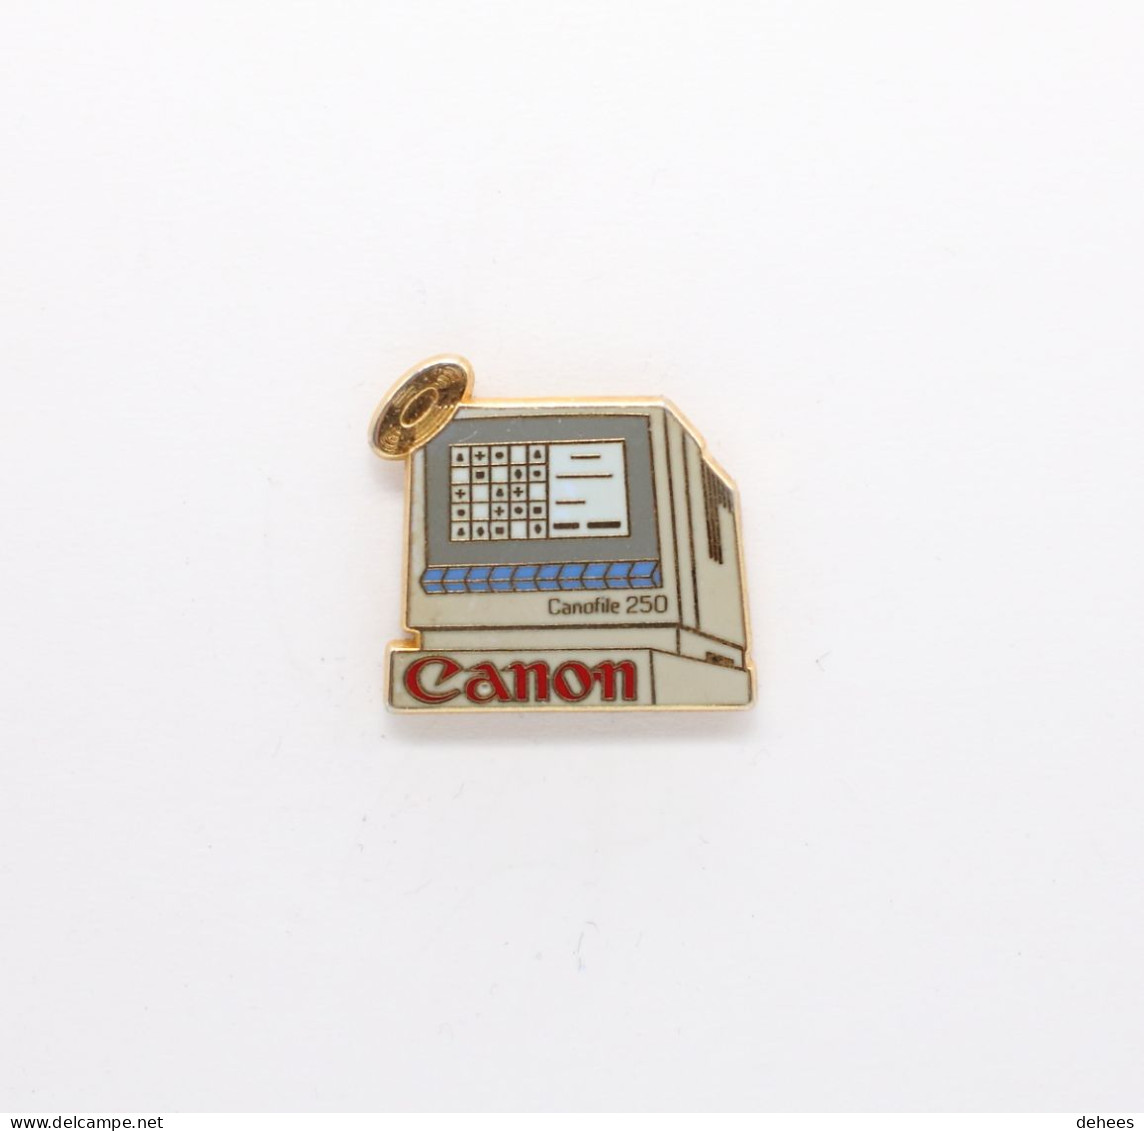 Canon, Canofile 250 - Photography